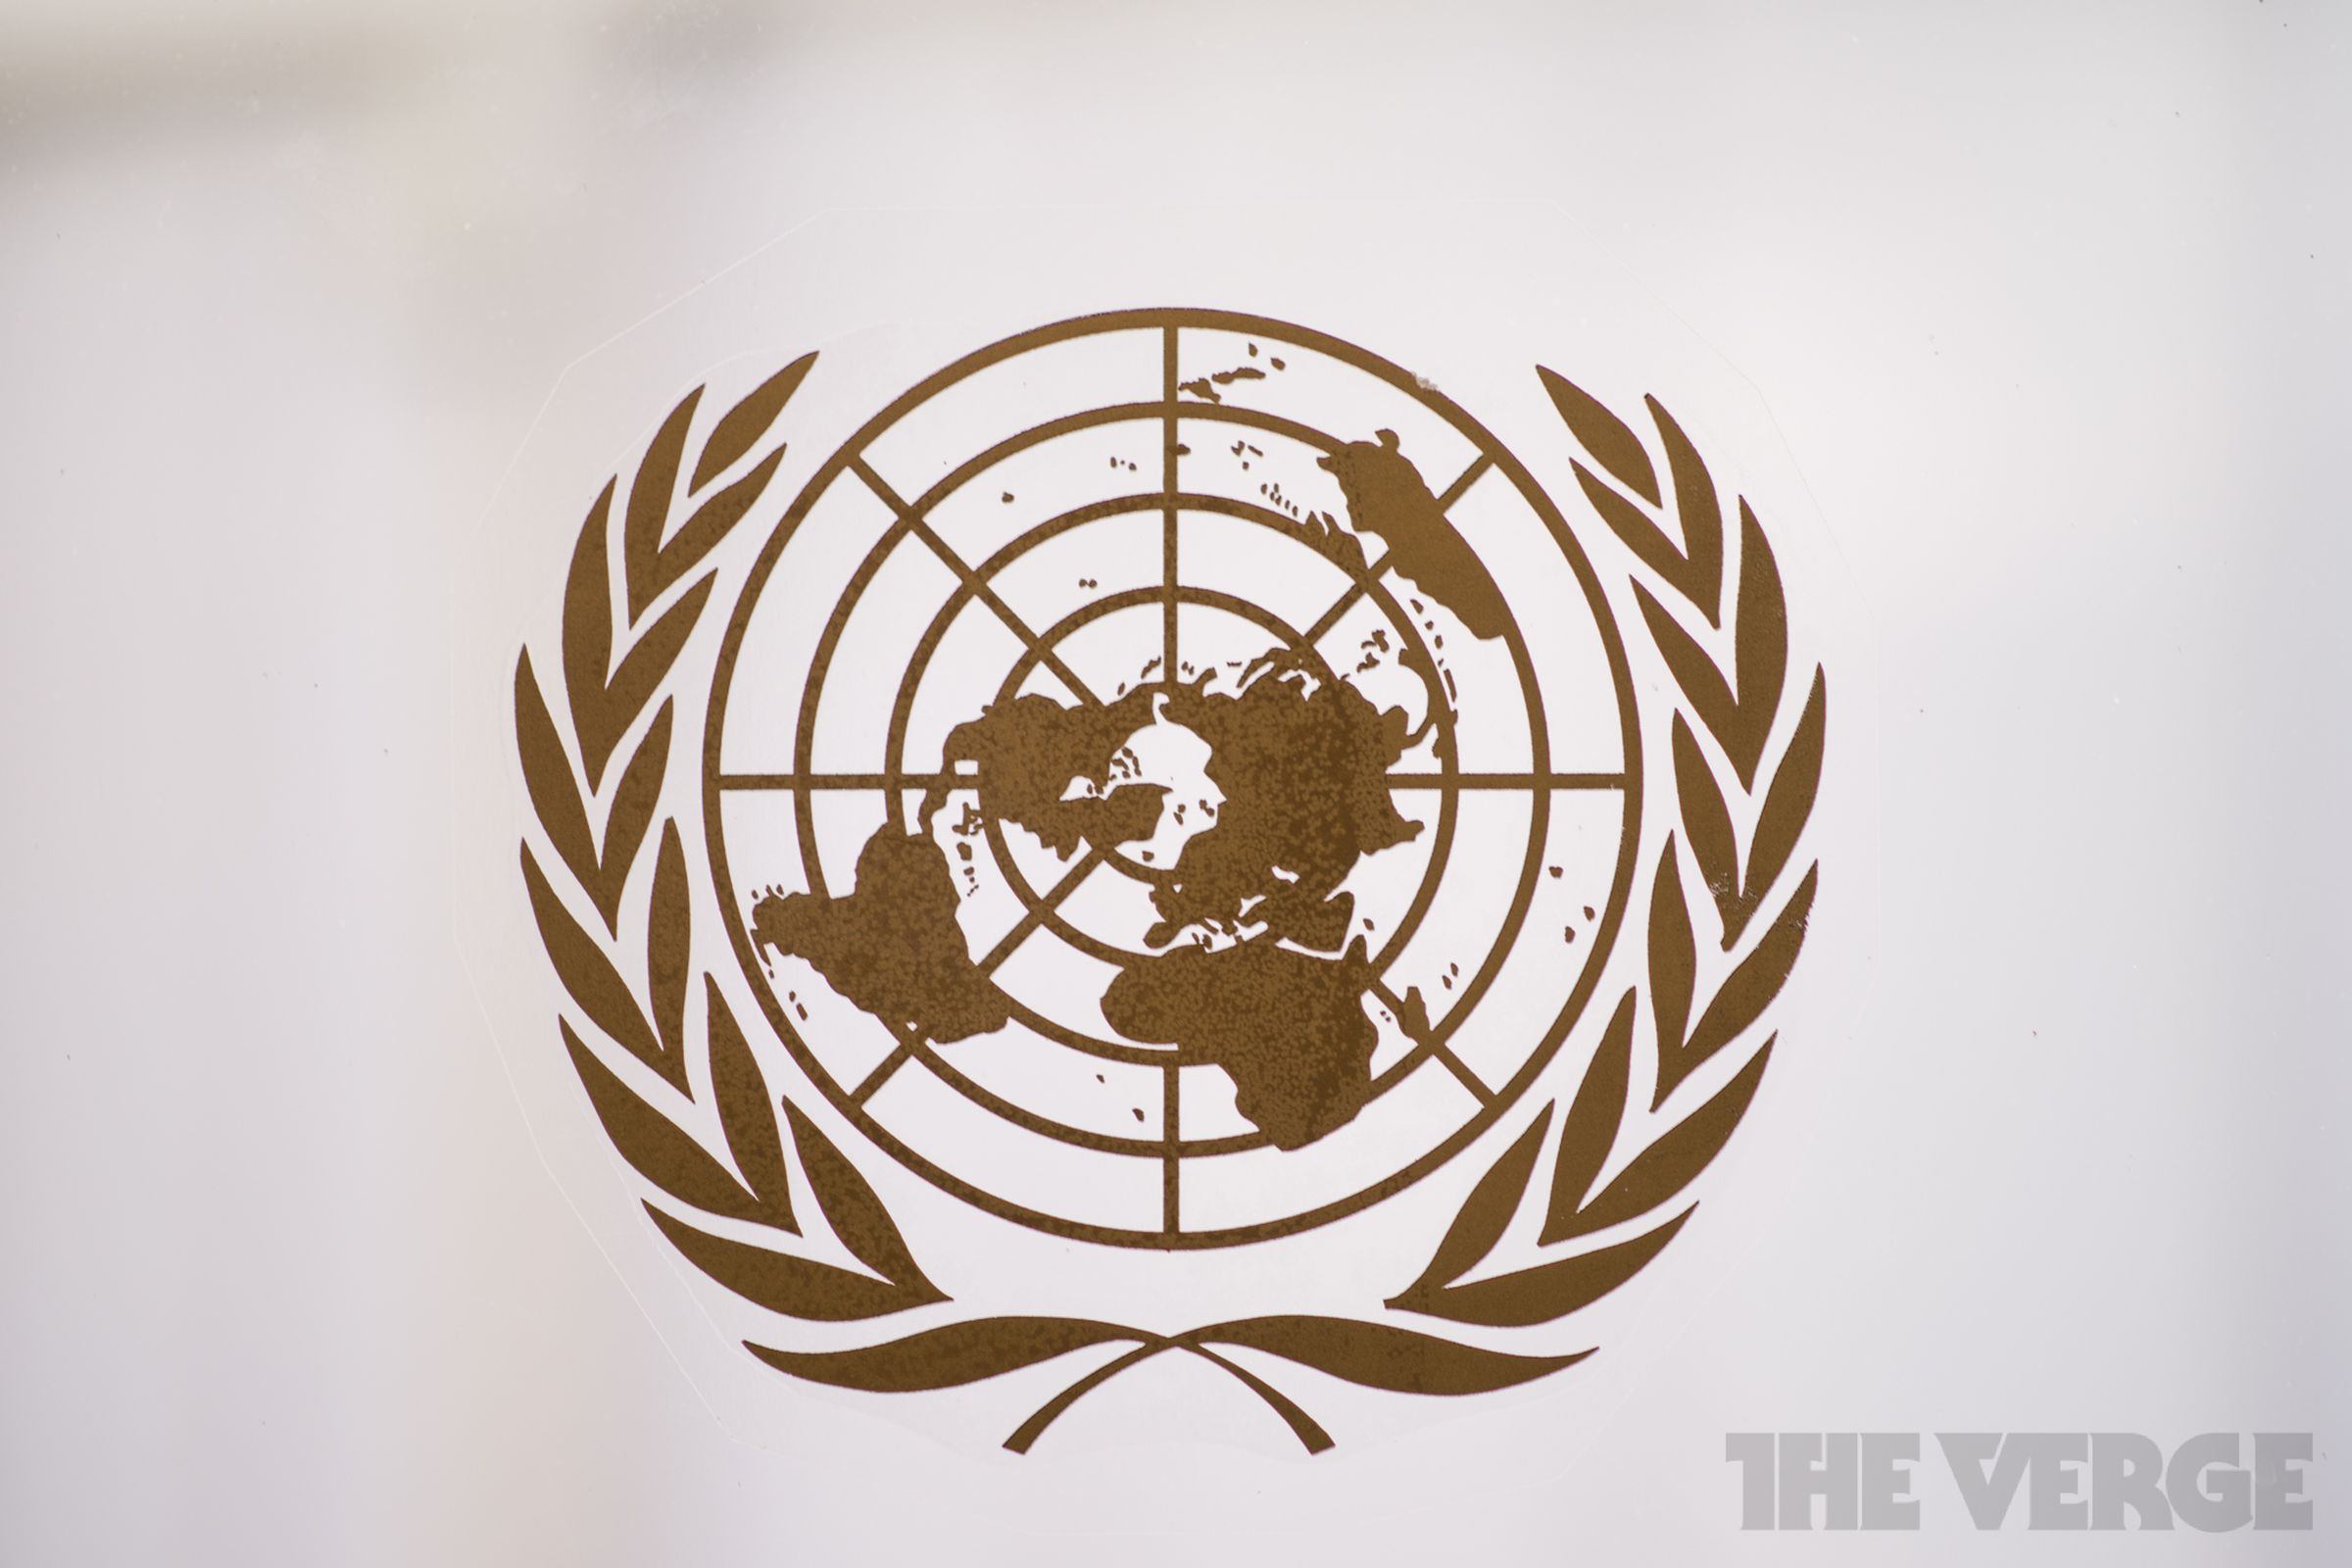 UN united nations logo (STOCK)